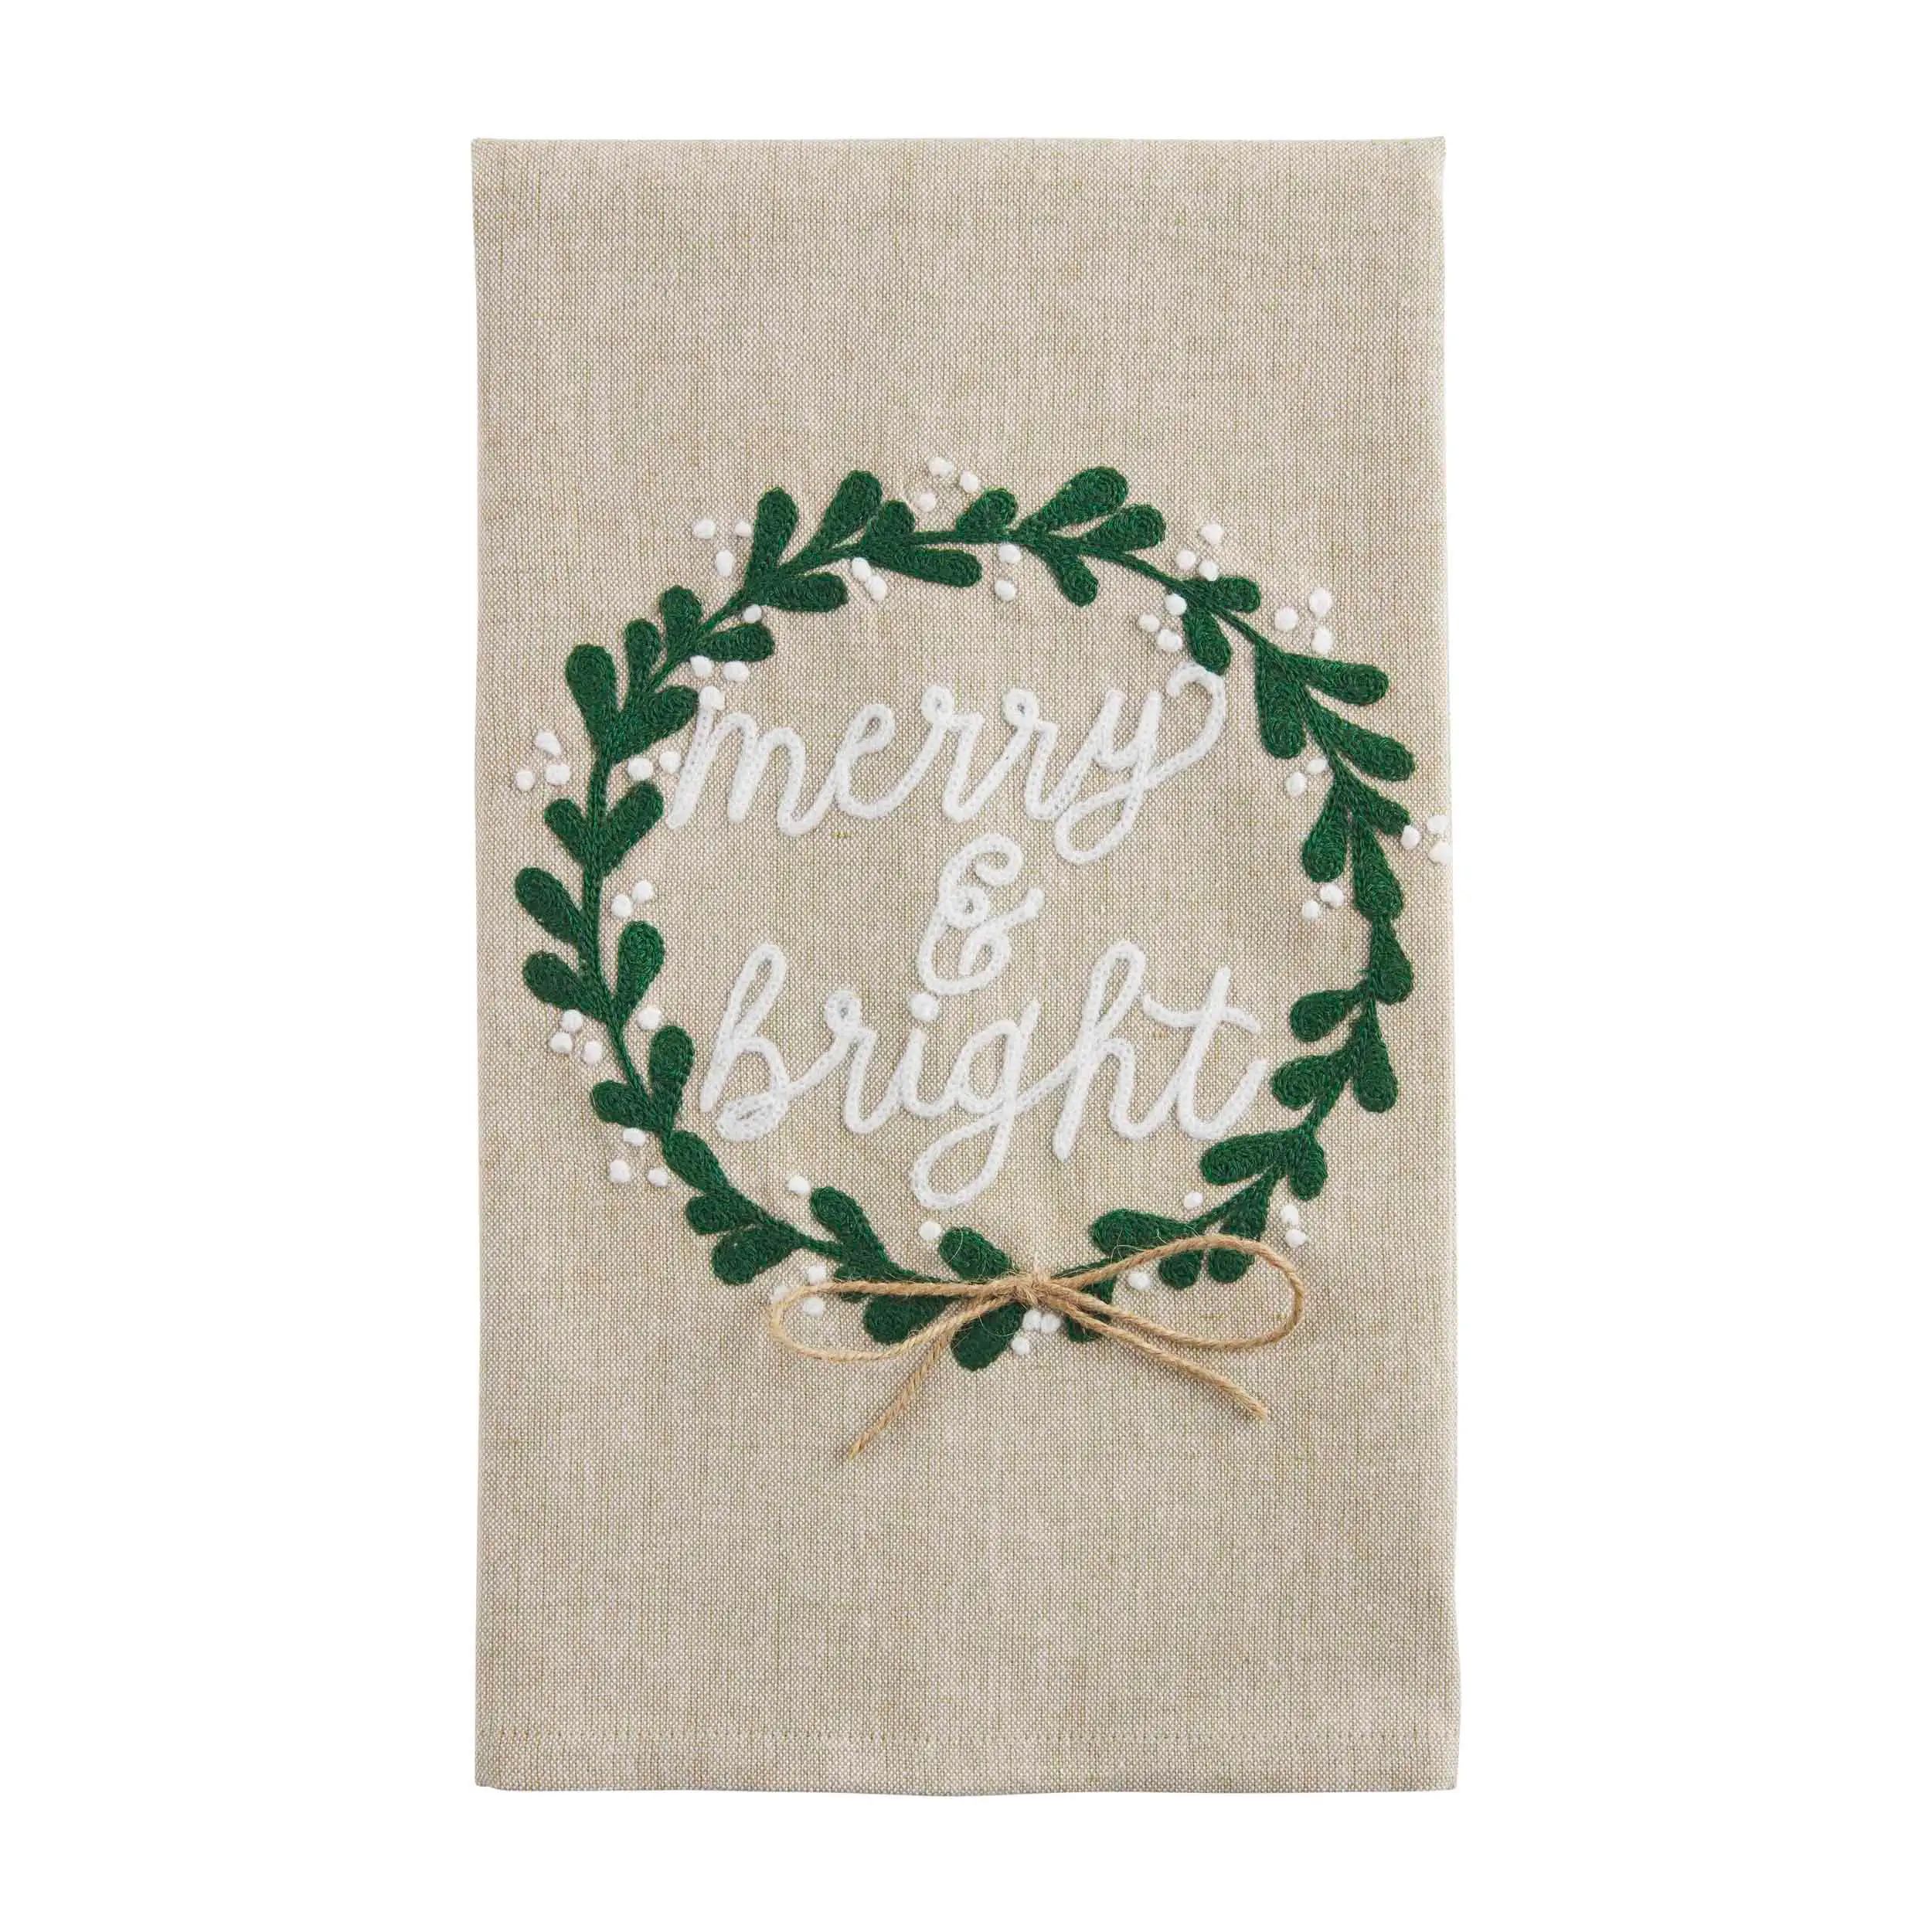 Merry and bright christmas greenery towel | Mud Pie (US)